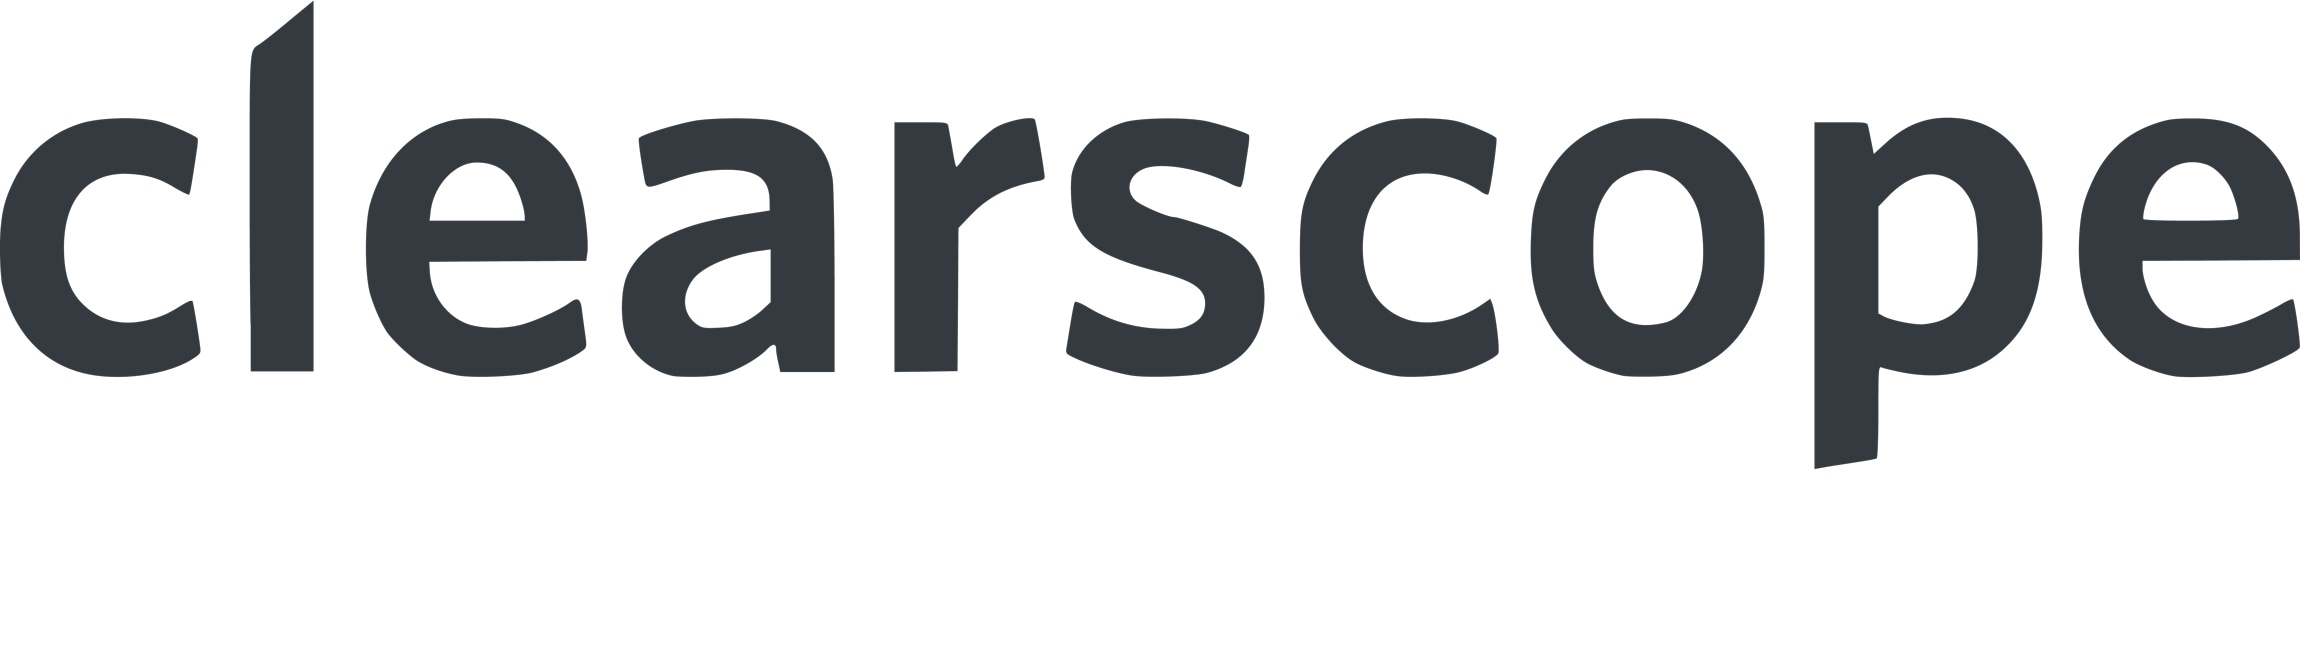 Logotipo de Clearscope